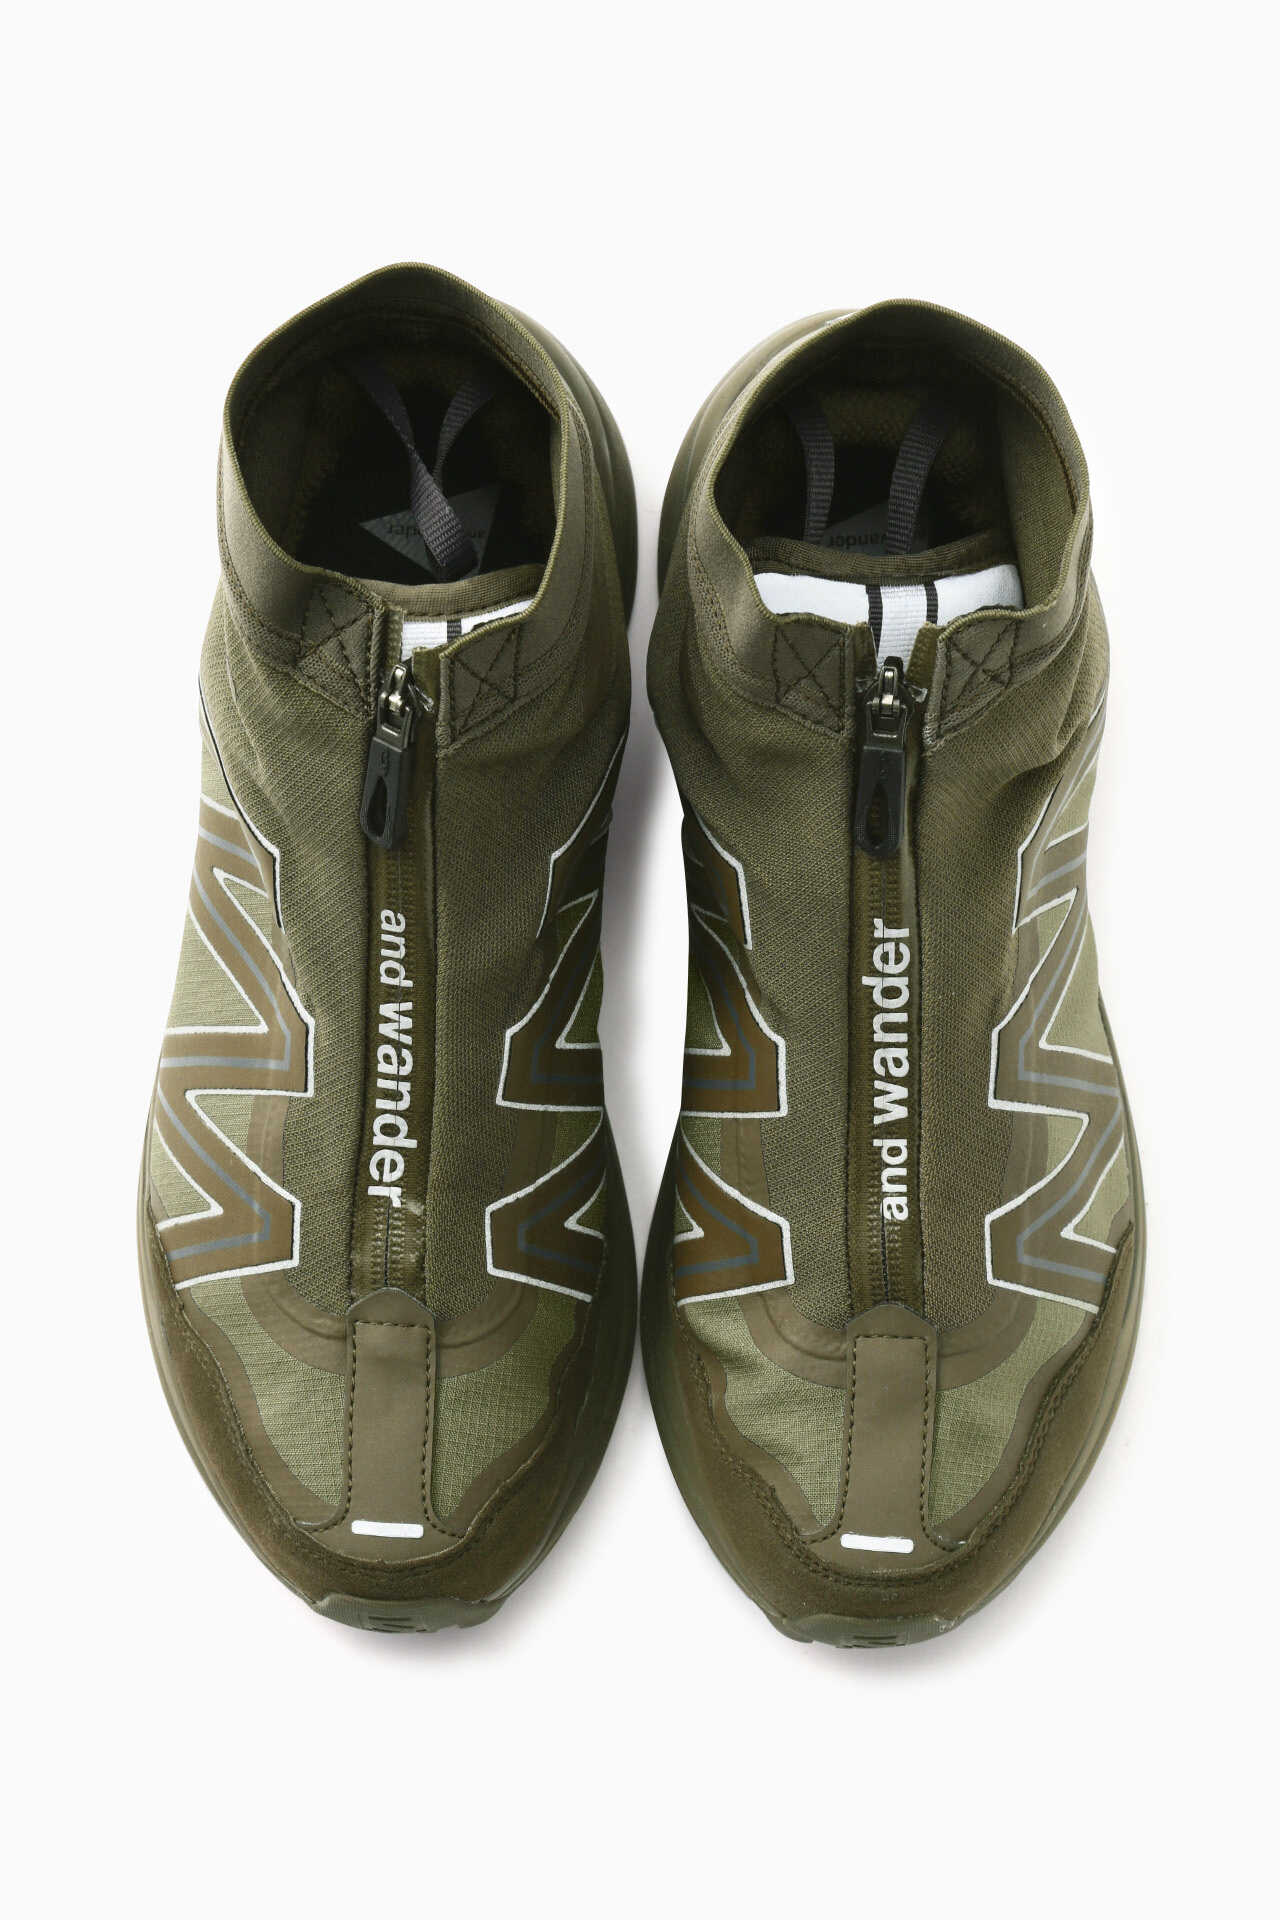 reflective highcut sneakers by SALOMON